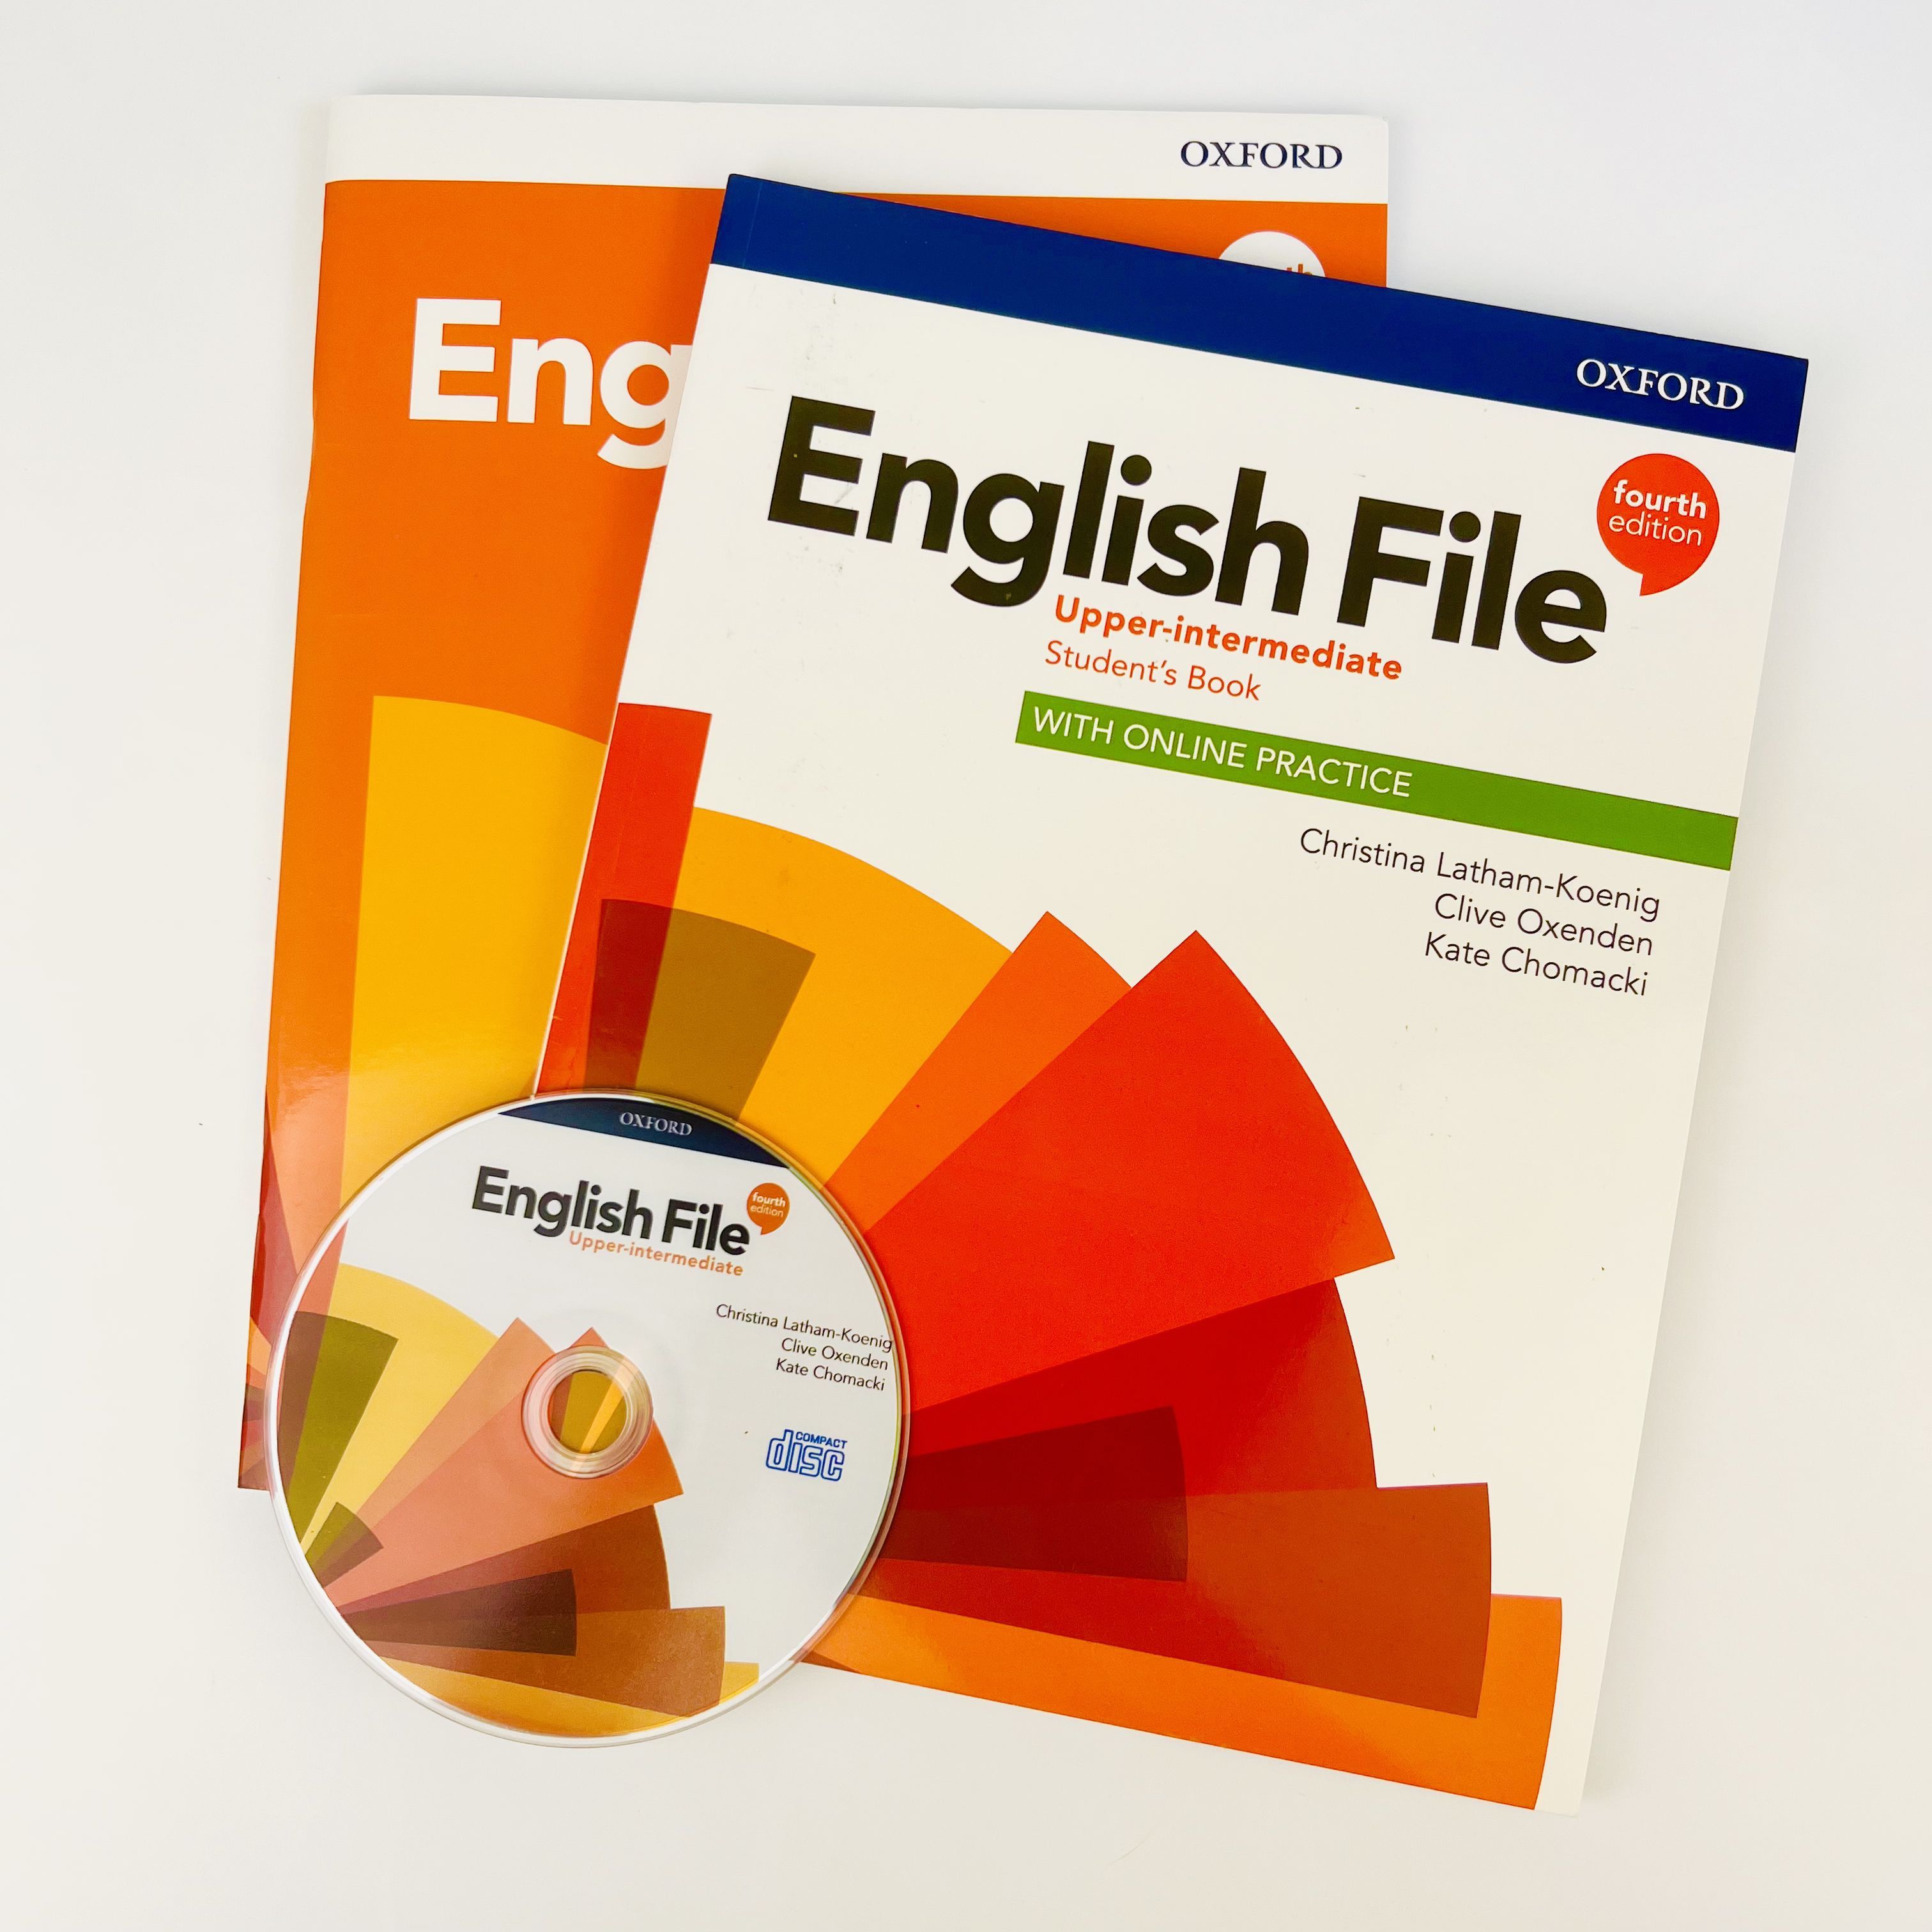 Oxford учебник. English file Upper Intermediate 4th Edition. English file Intermediate 4th Edition. Английский Оксфорд учебник English file.